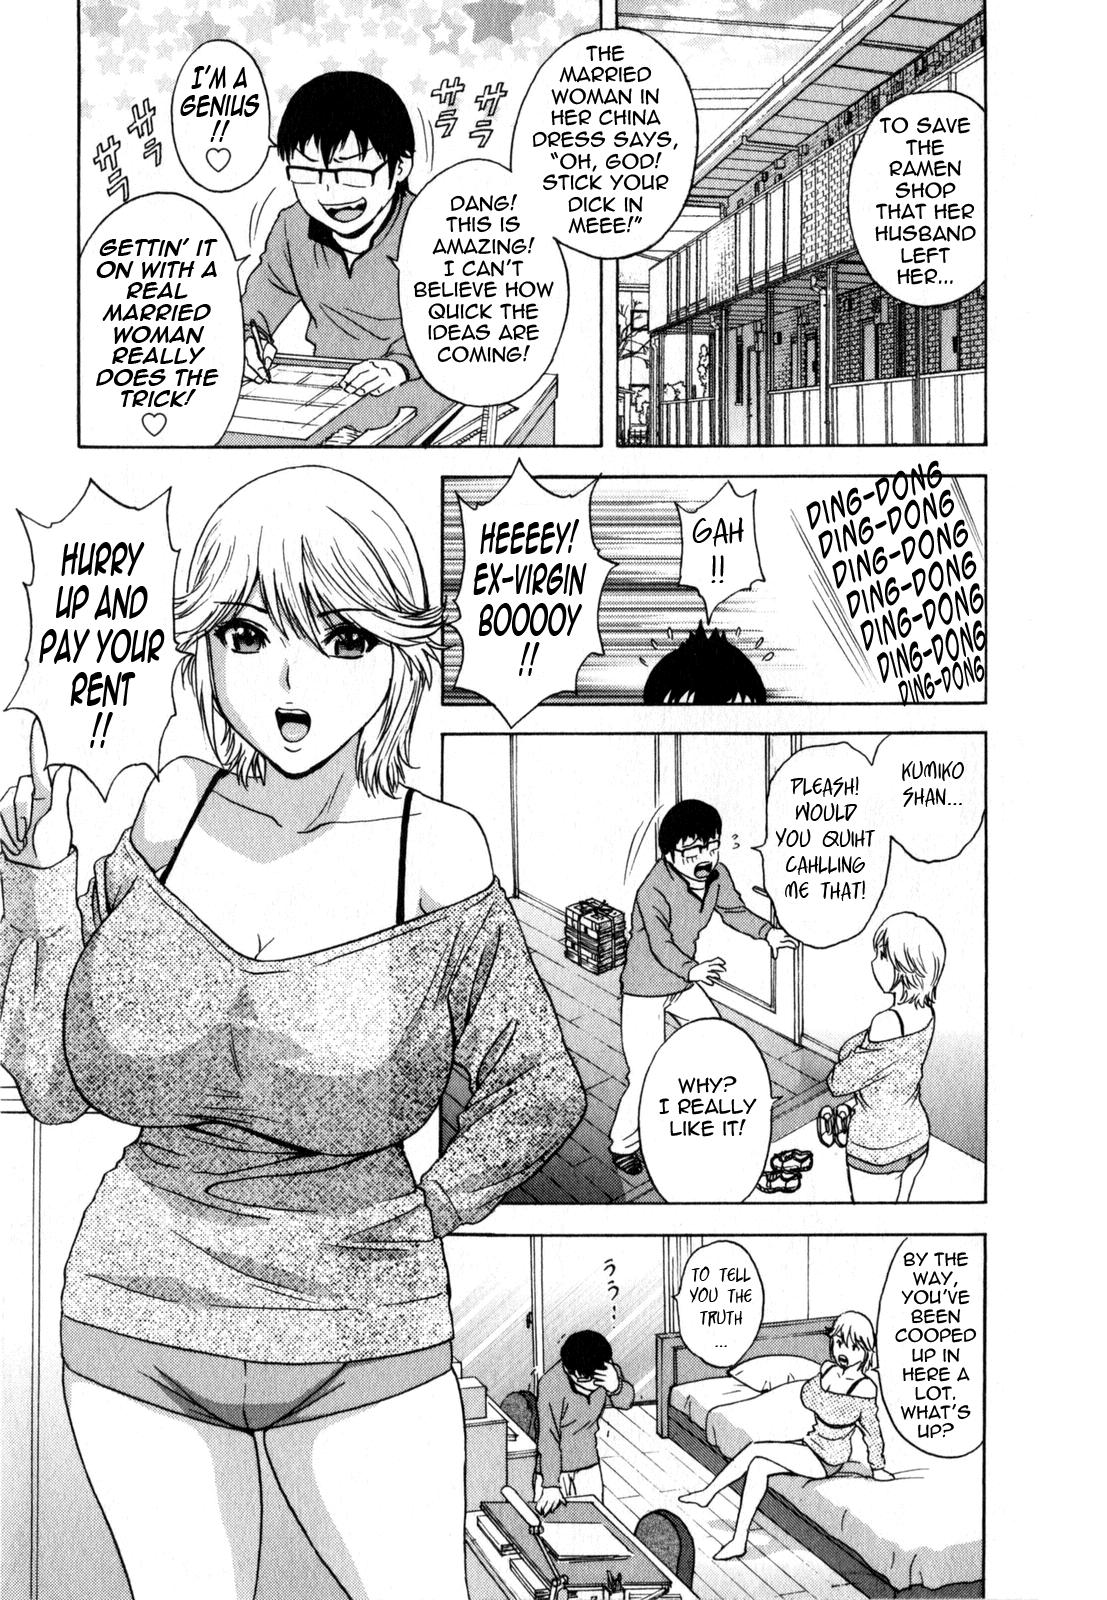 [Hidemaru] Life with Married Women Just Like a Manga 2 - Ch. 1-6 [English] {Tadanohito} 58